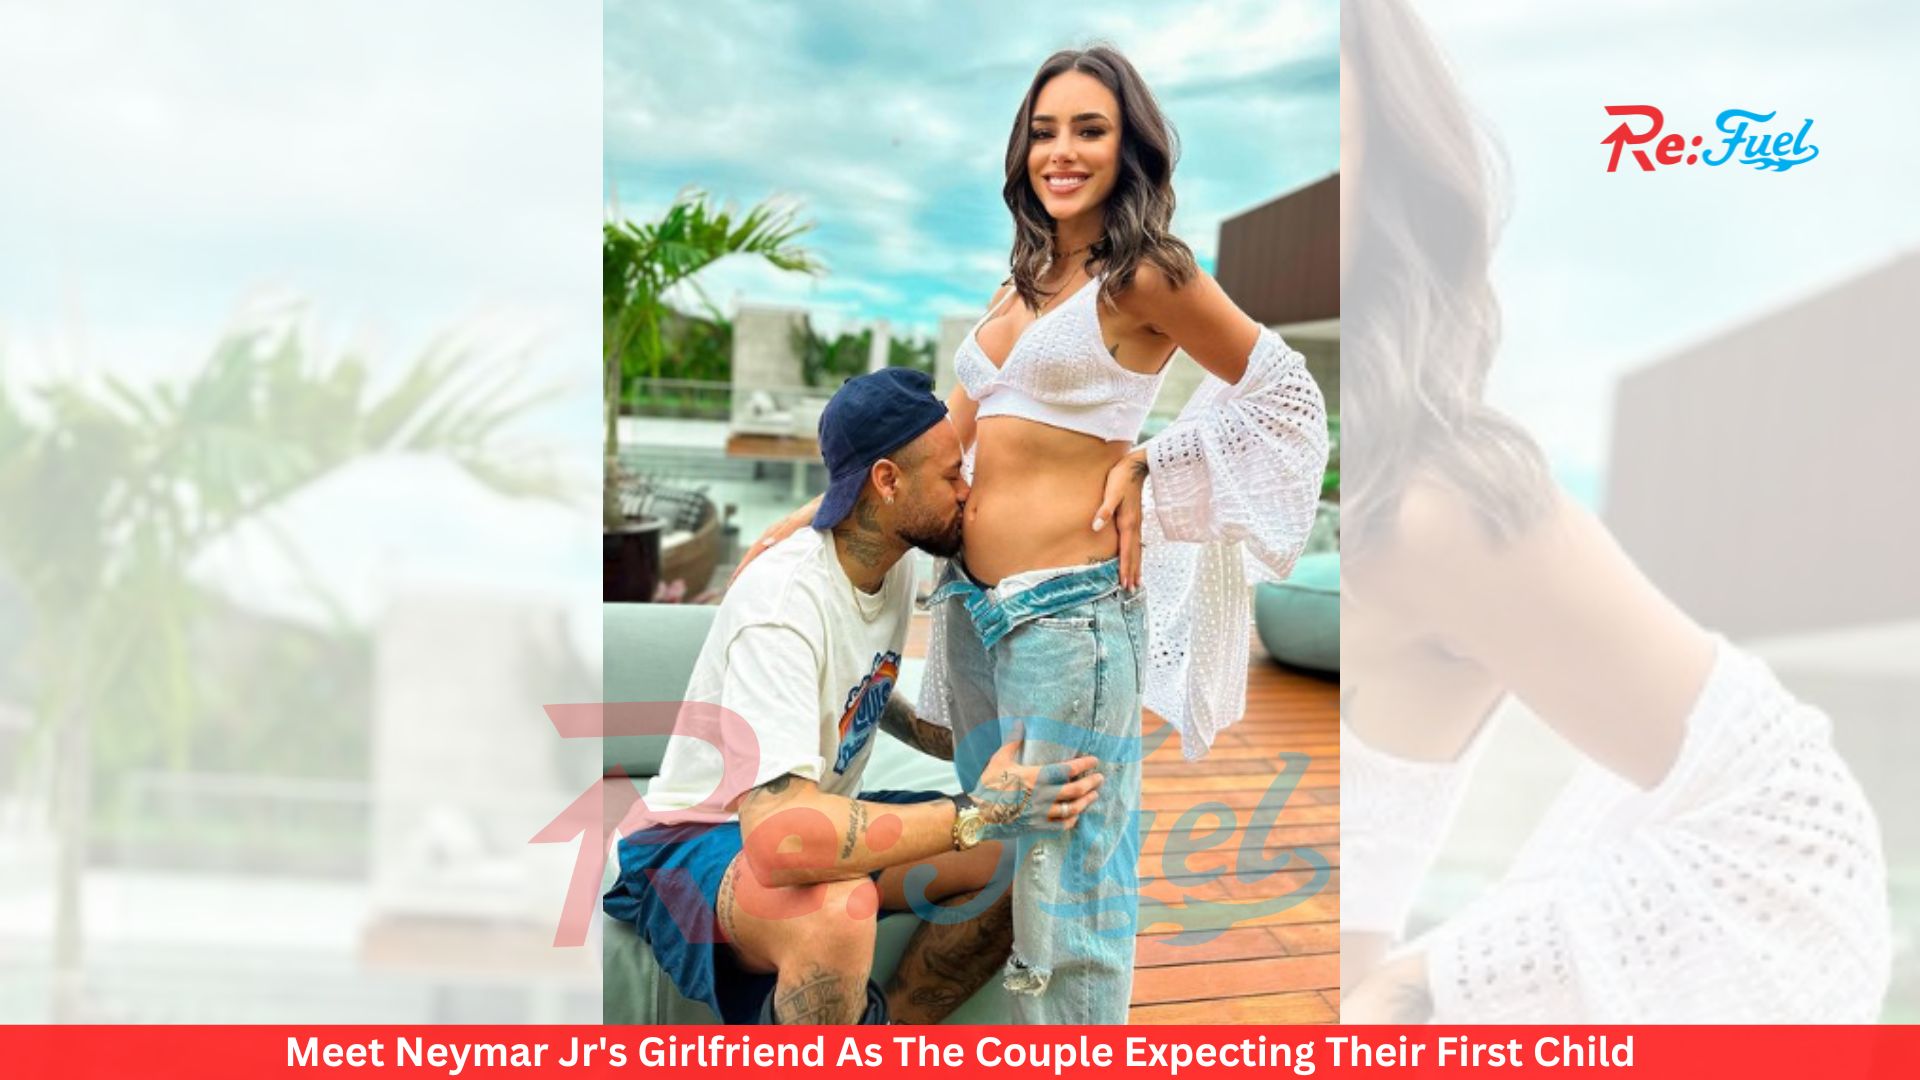 Meet Neymar Jr's Girlfriend As The Couple Expecting Their First Child